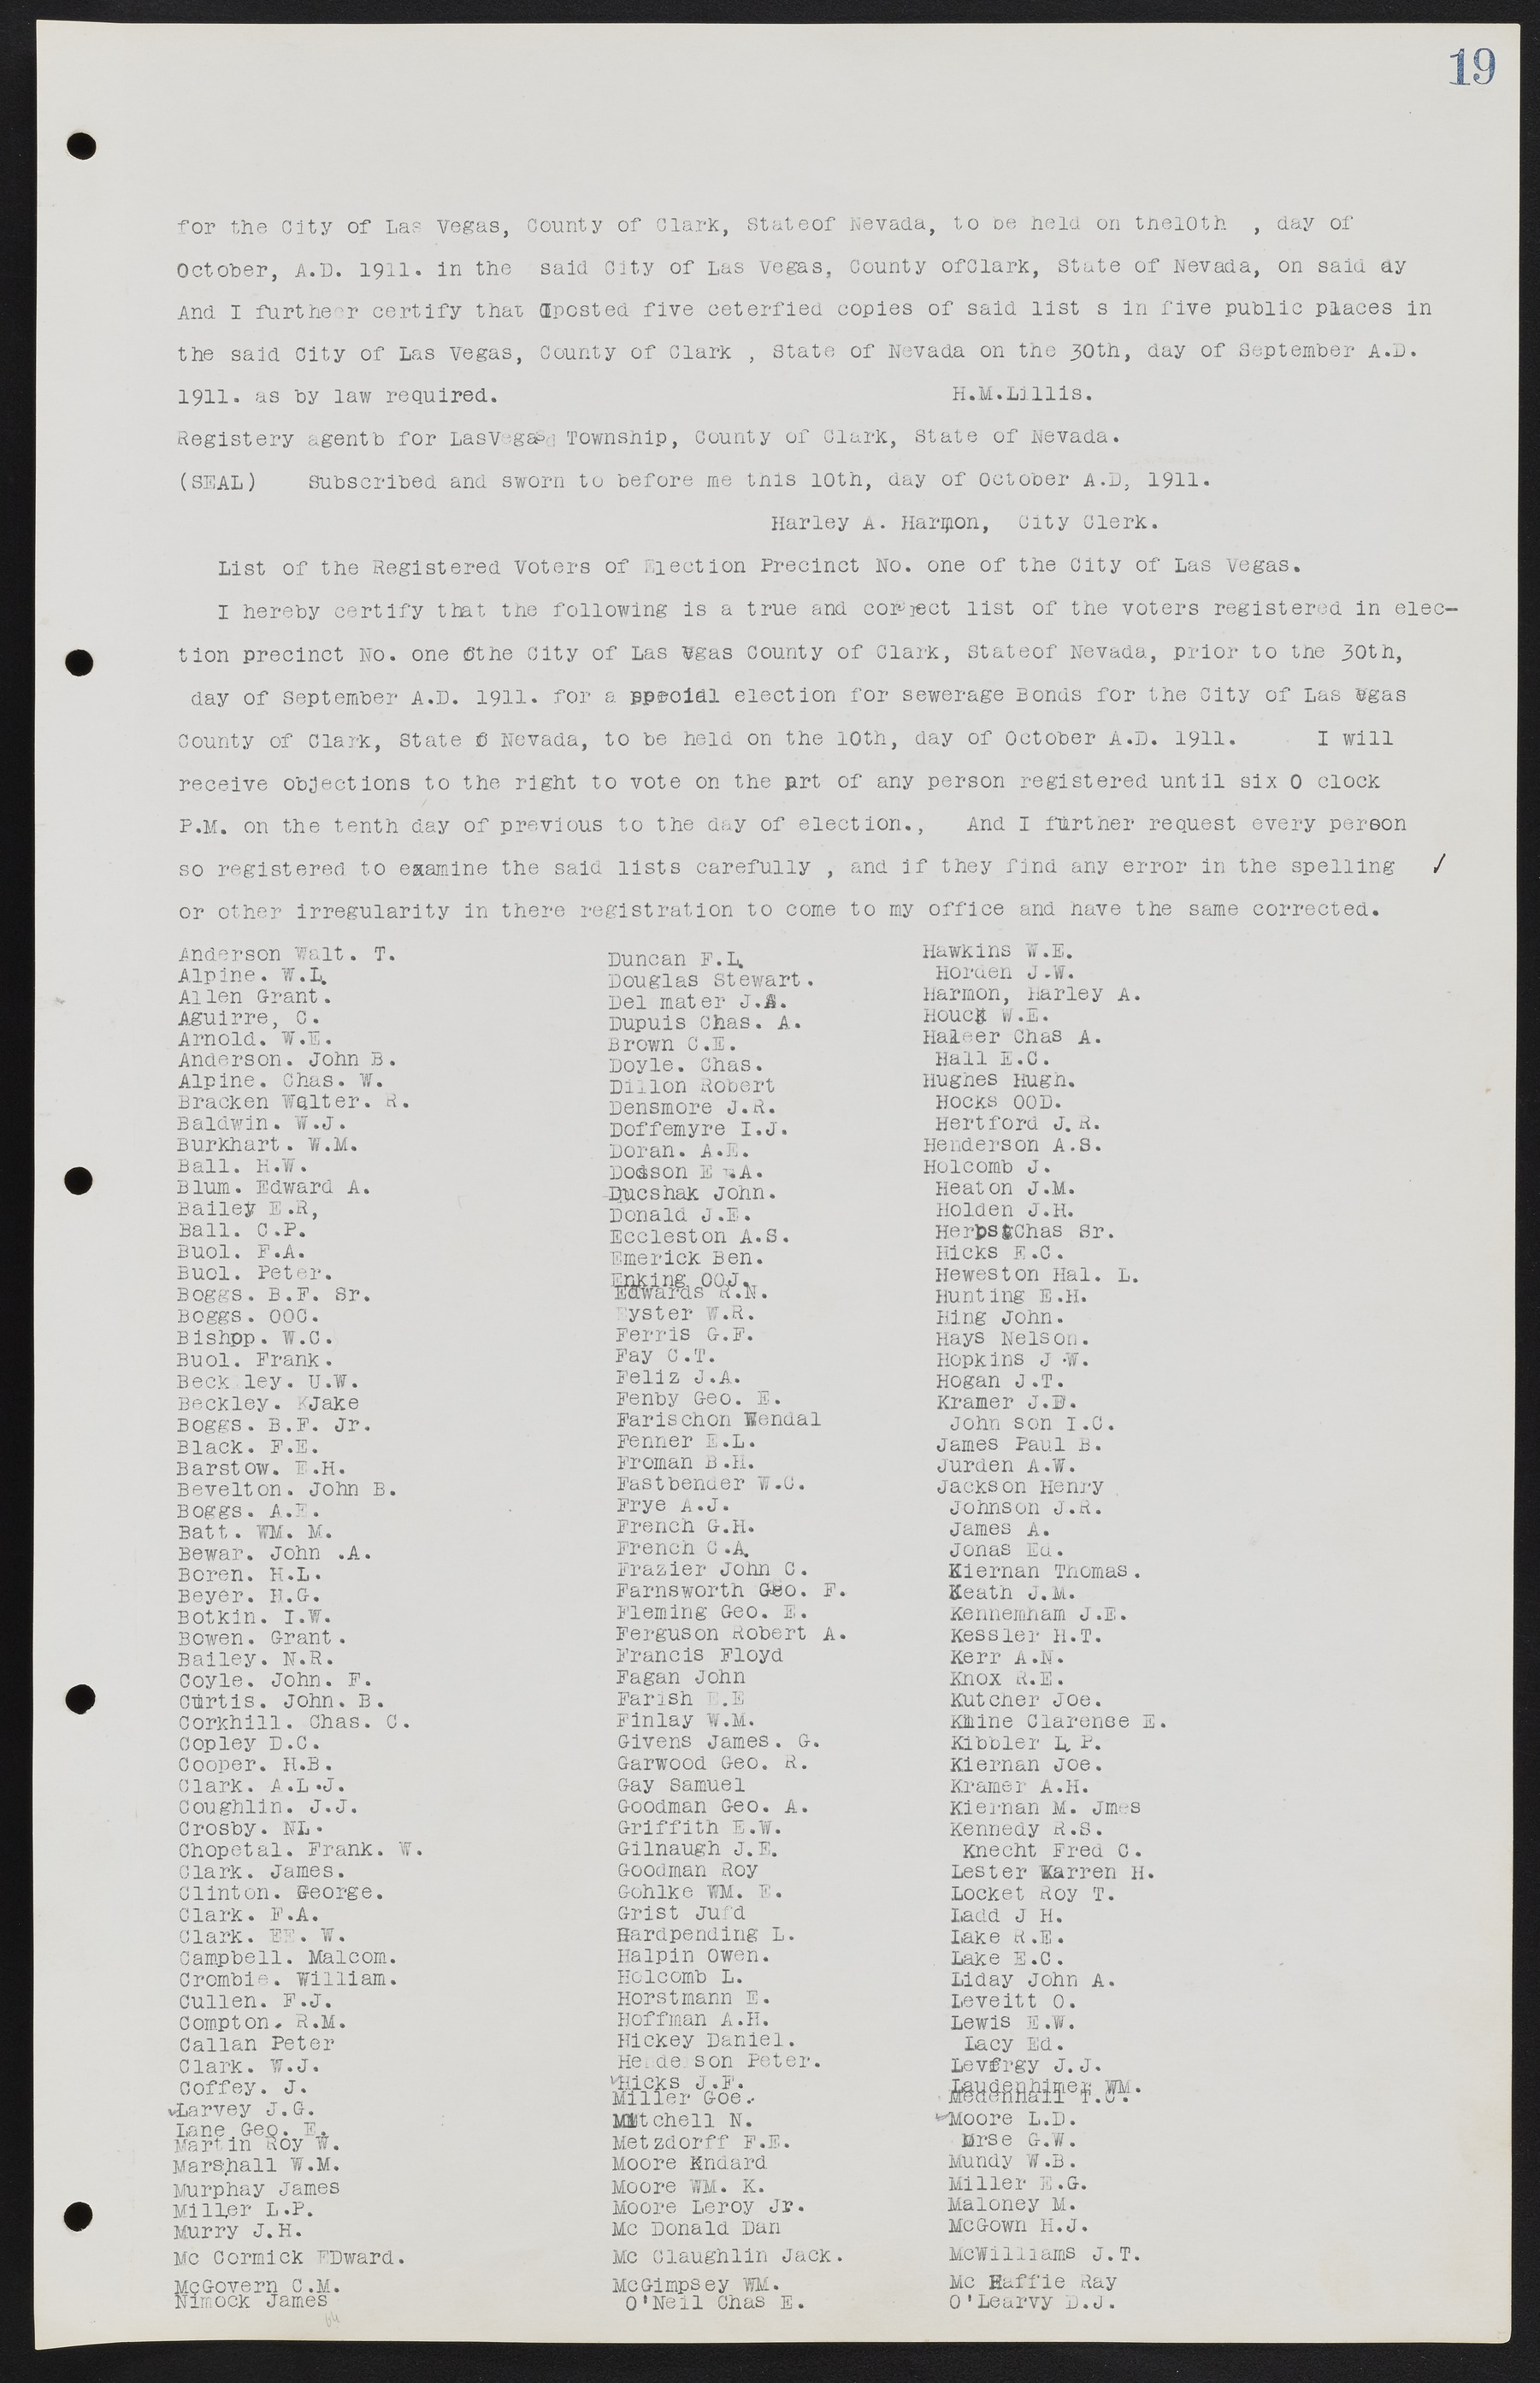 Las Vegas City Commission Minutes, June 22, 1911 to February 7, 1922, lvc000001-33